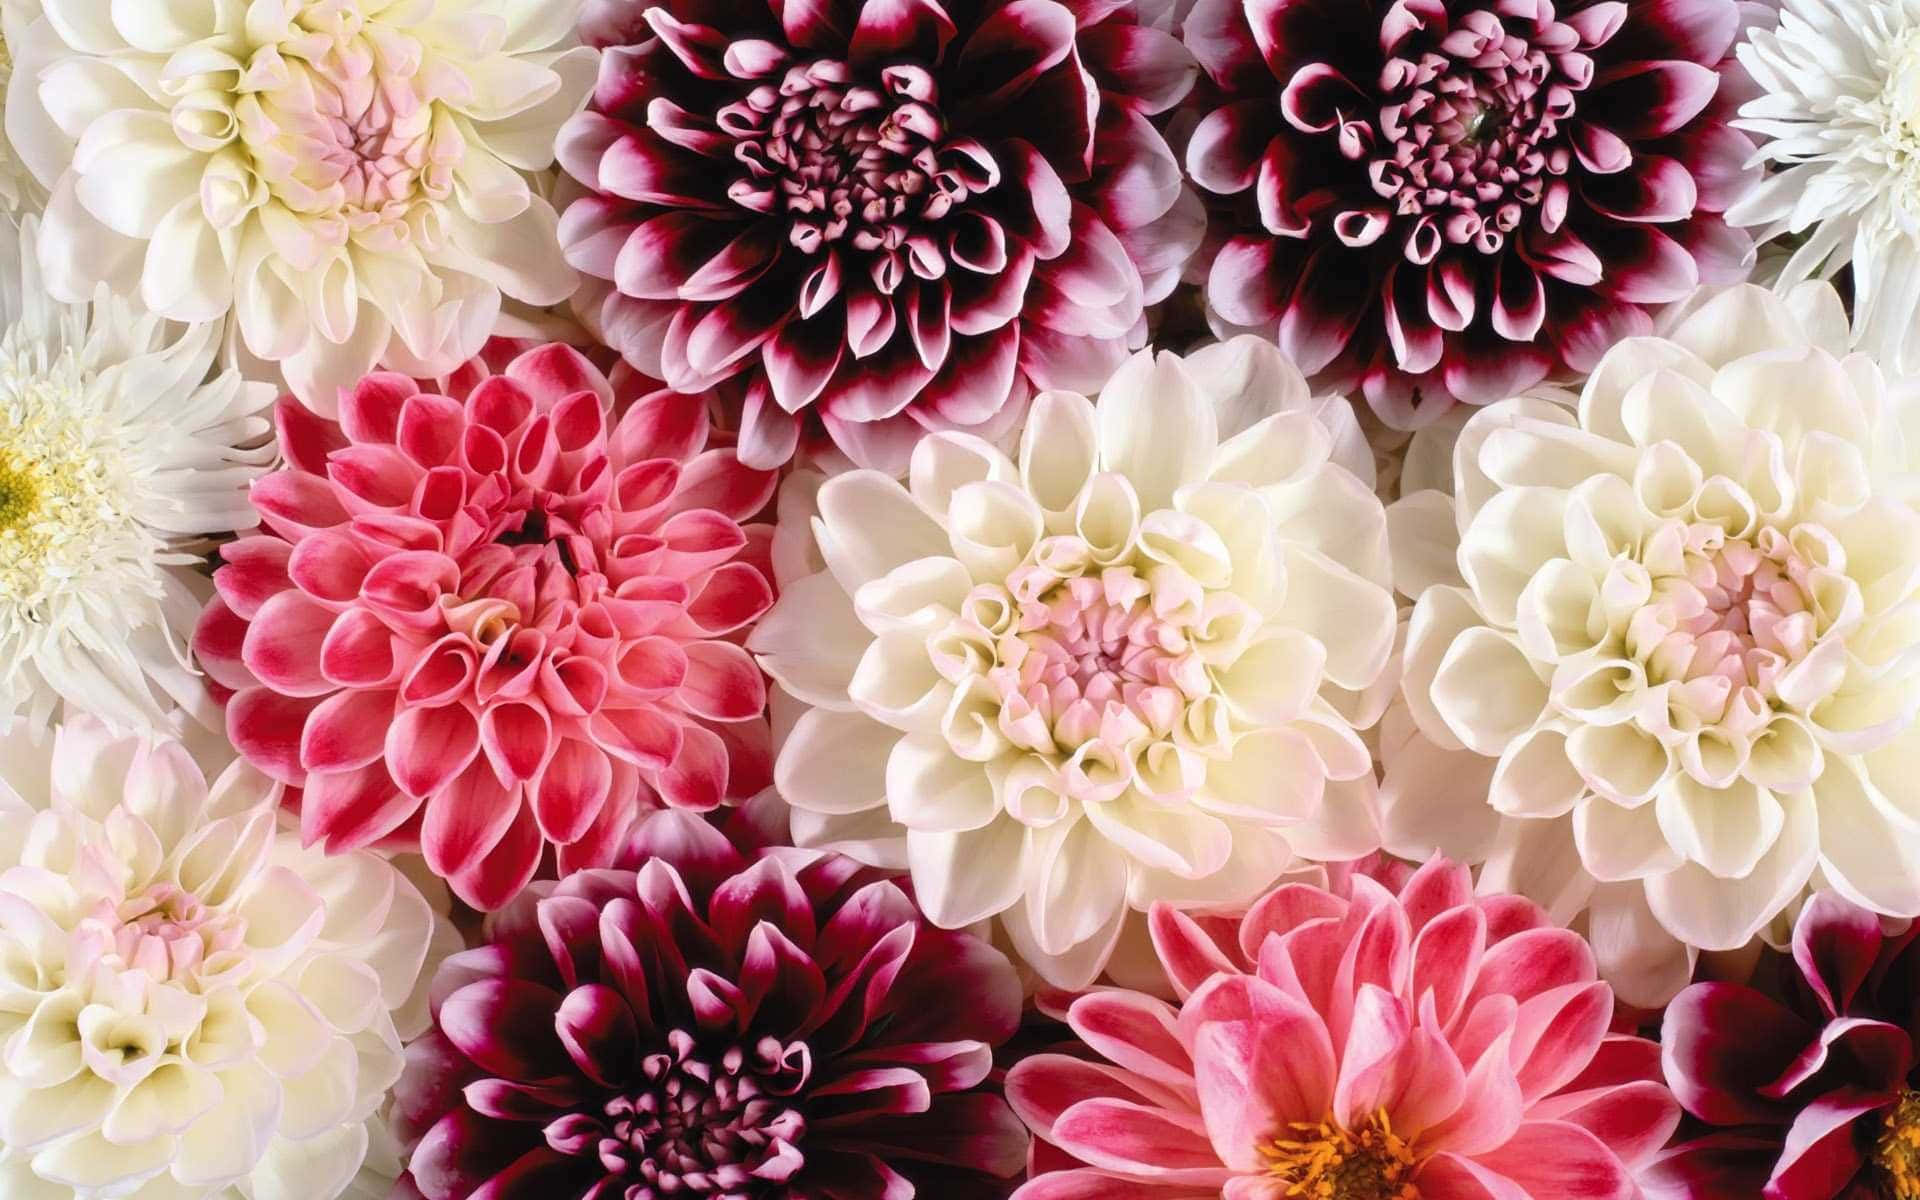 Mesmerizing Tumblr Flowers Desktop Wallpaper